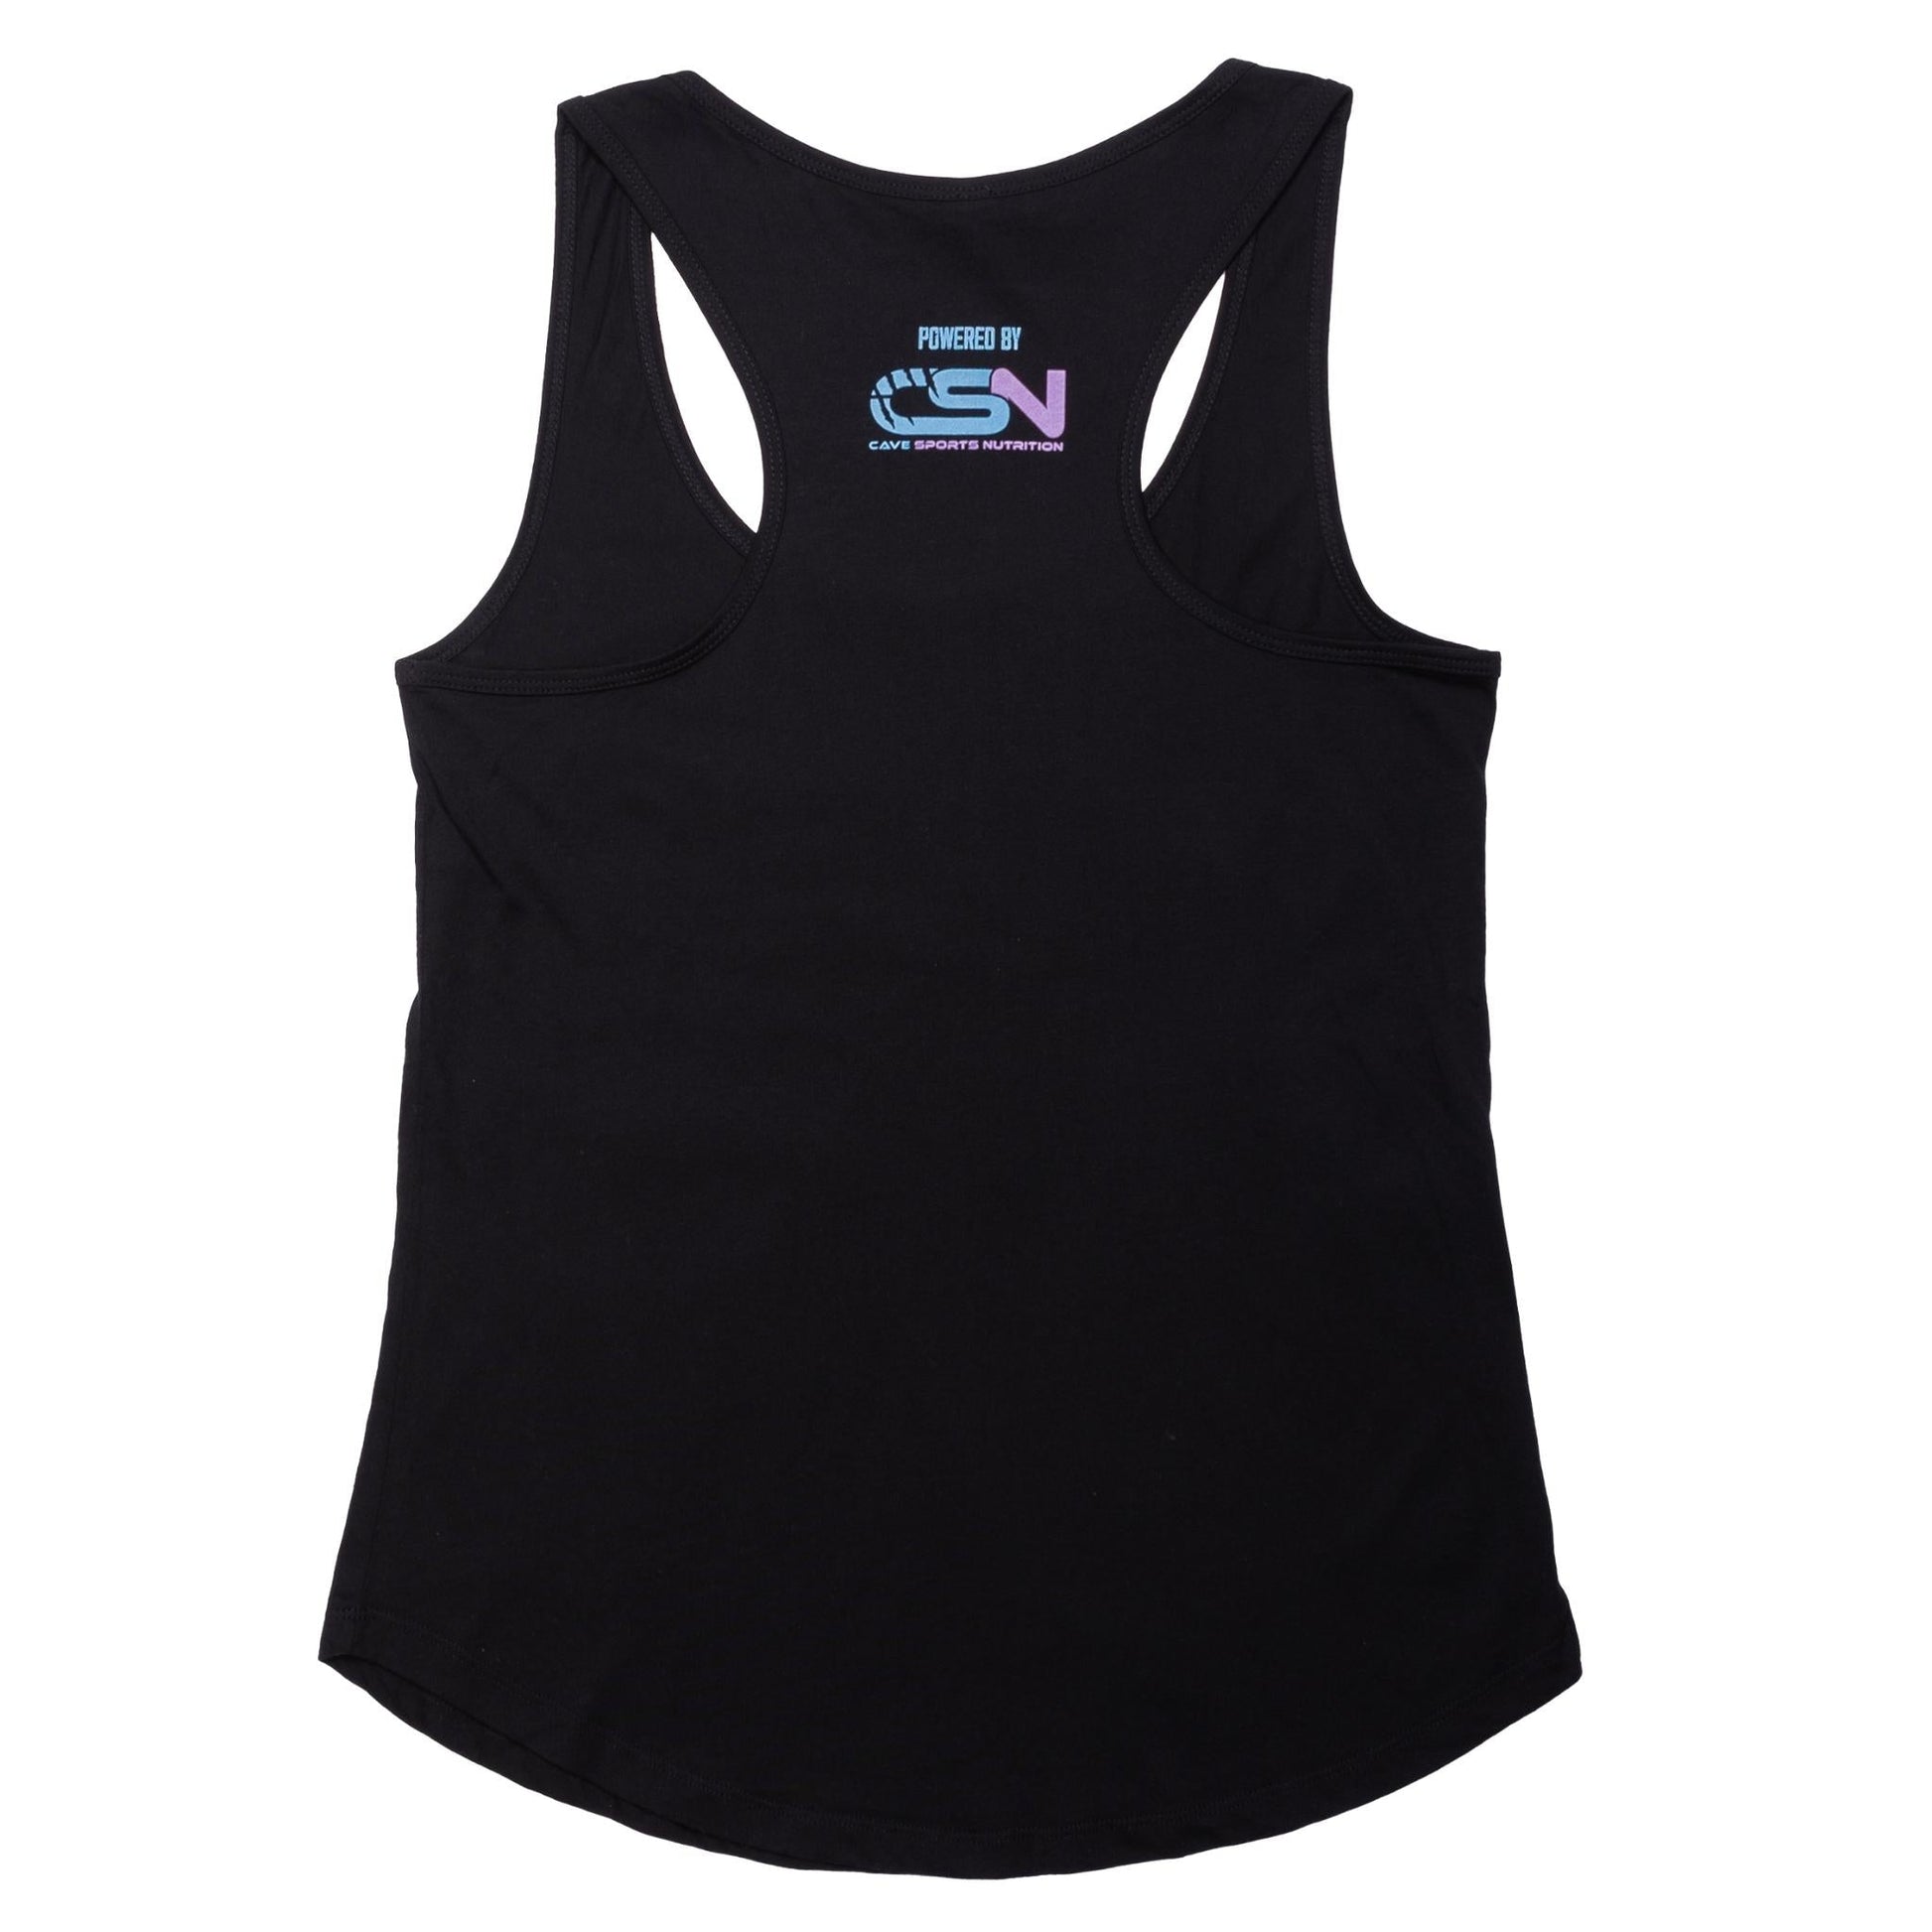 Cave Gym Women's Racerback Singlet Black - Merchandise - X-Small - The Cave Gym